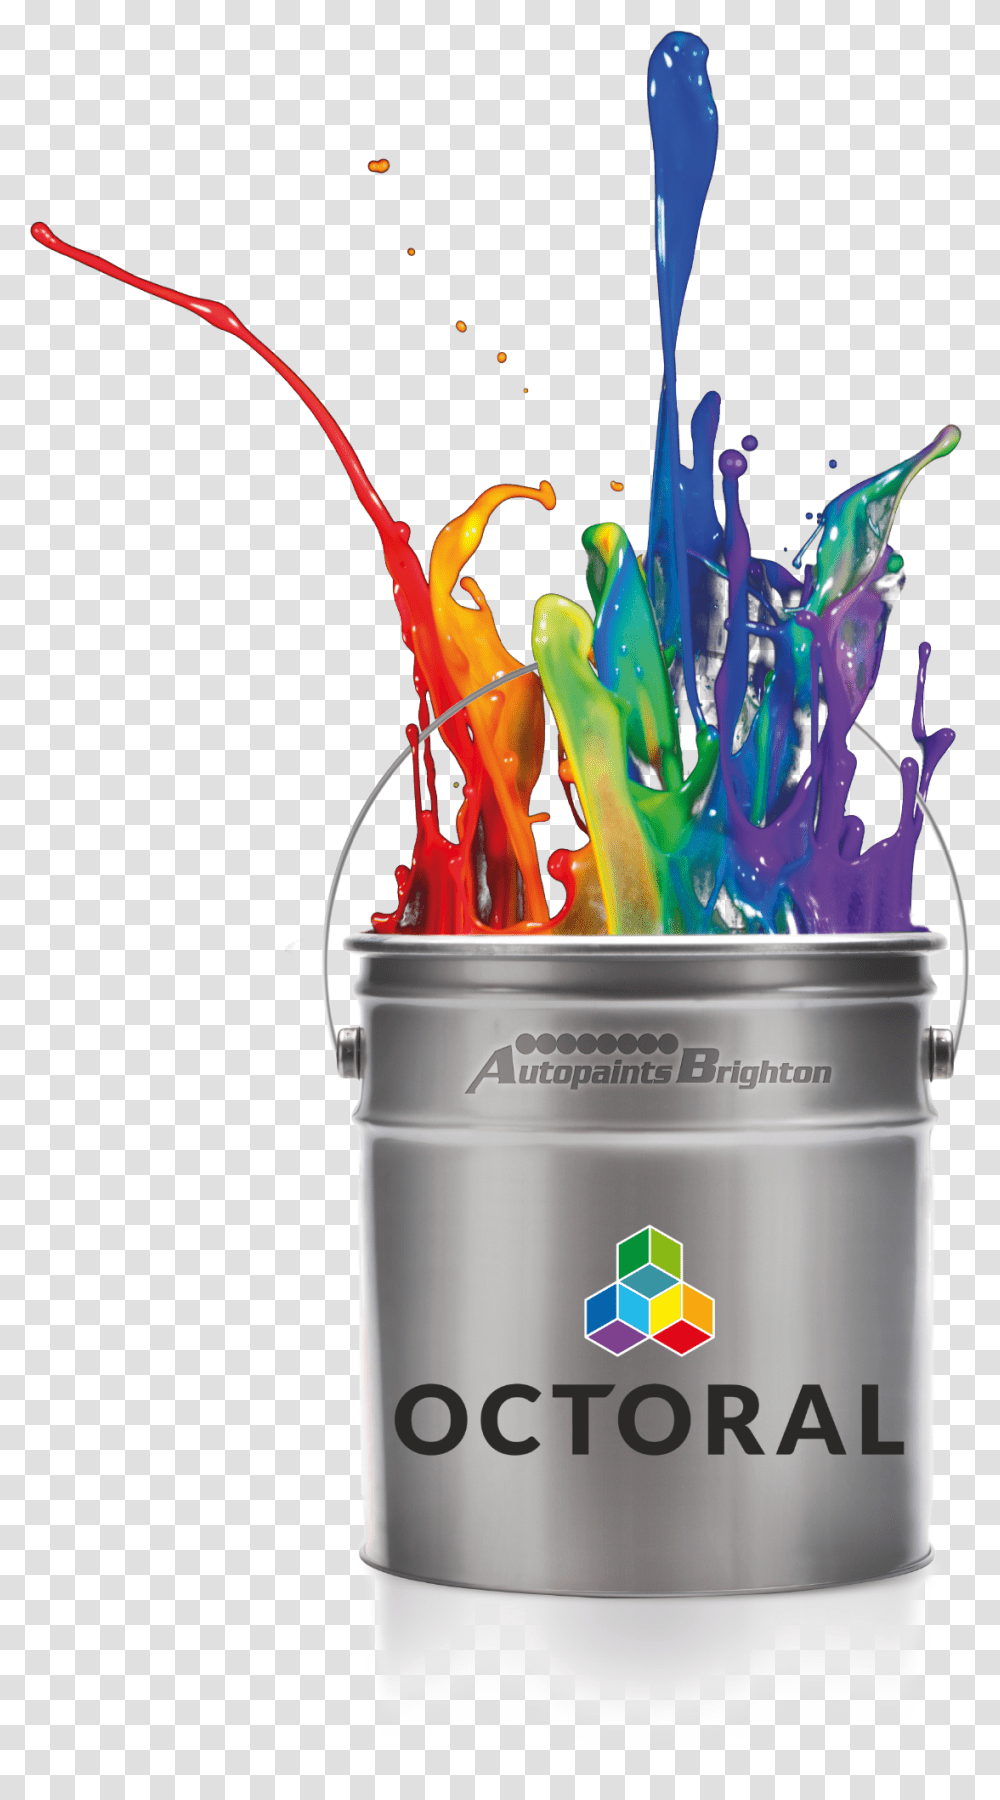 Paint Bucket Spill Splash Paint From Gallon Bucket, Mixer, Appliance, Paint Container Transparent Png